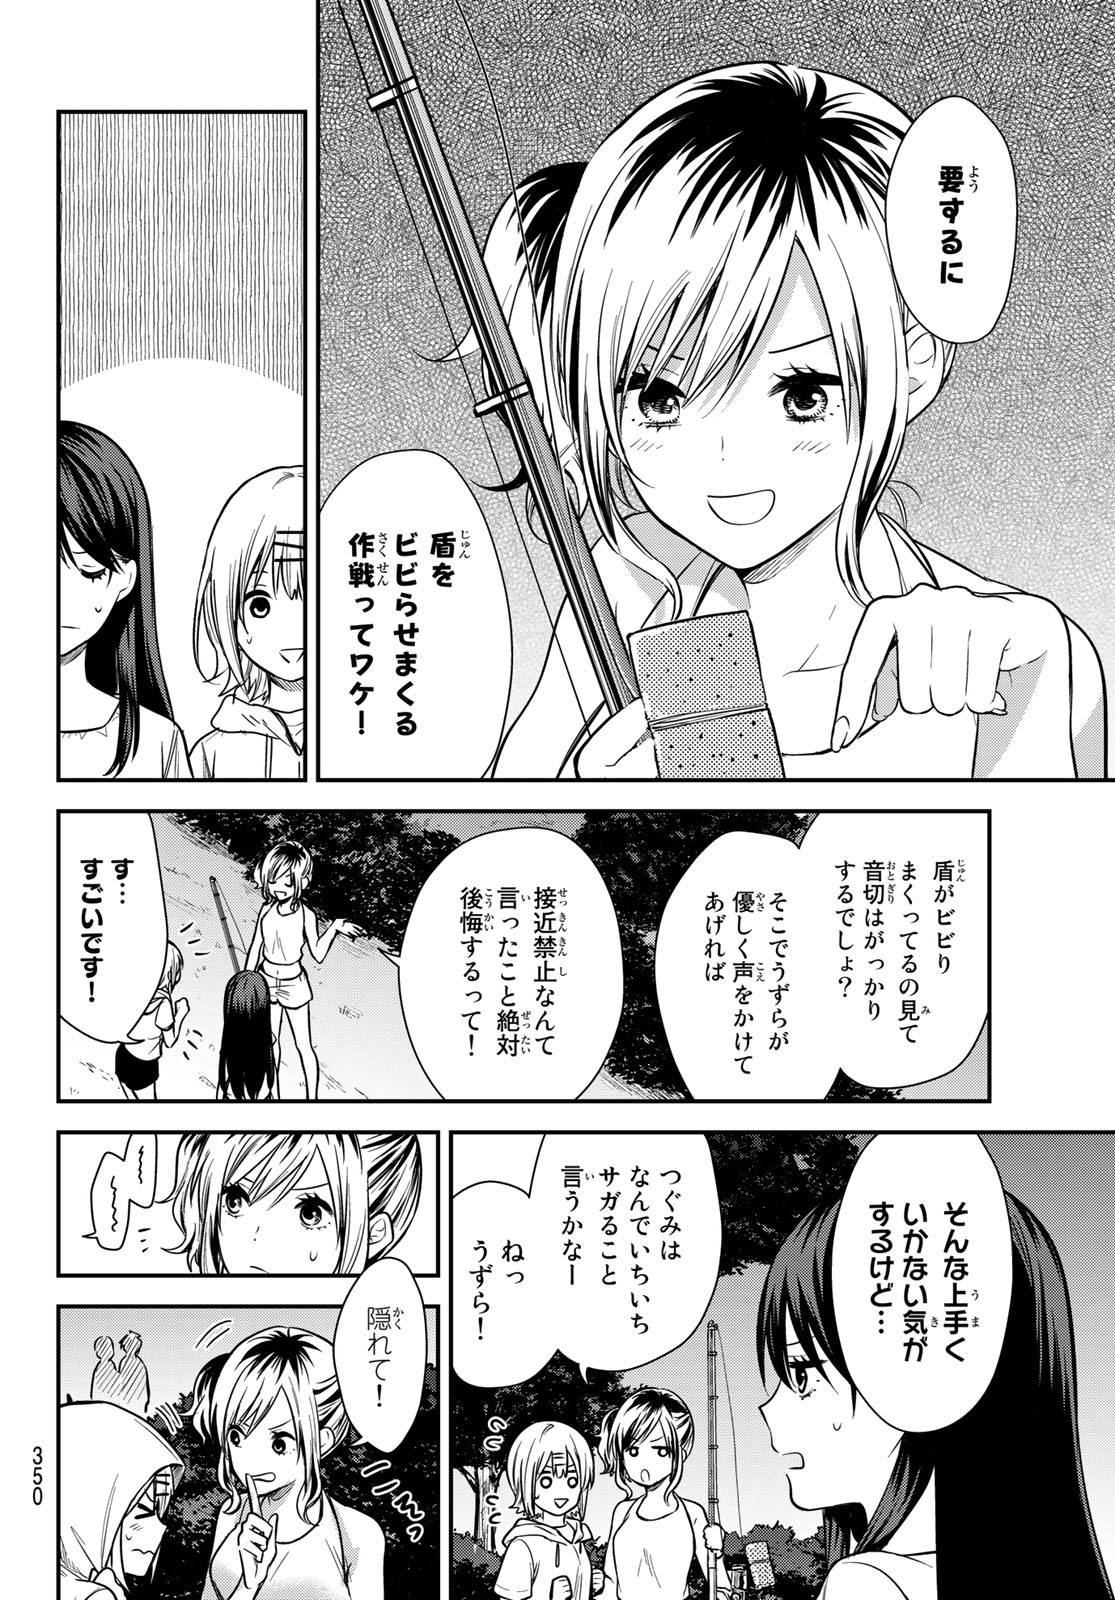 Kimi ga Megami Nara Ii no ni (I Wish You Were My Muse) - Chapter 021 - Page 4